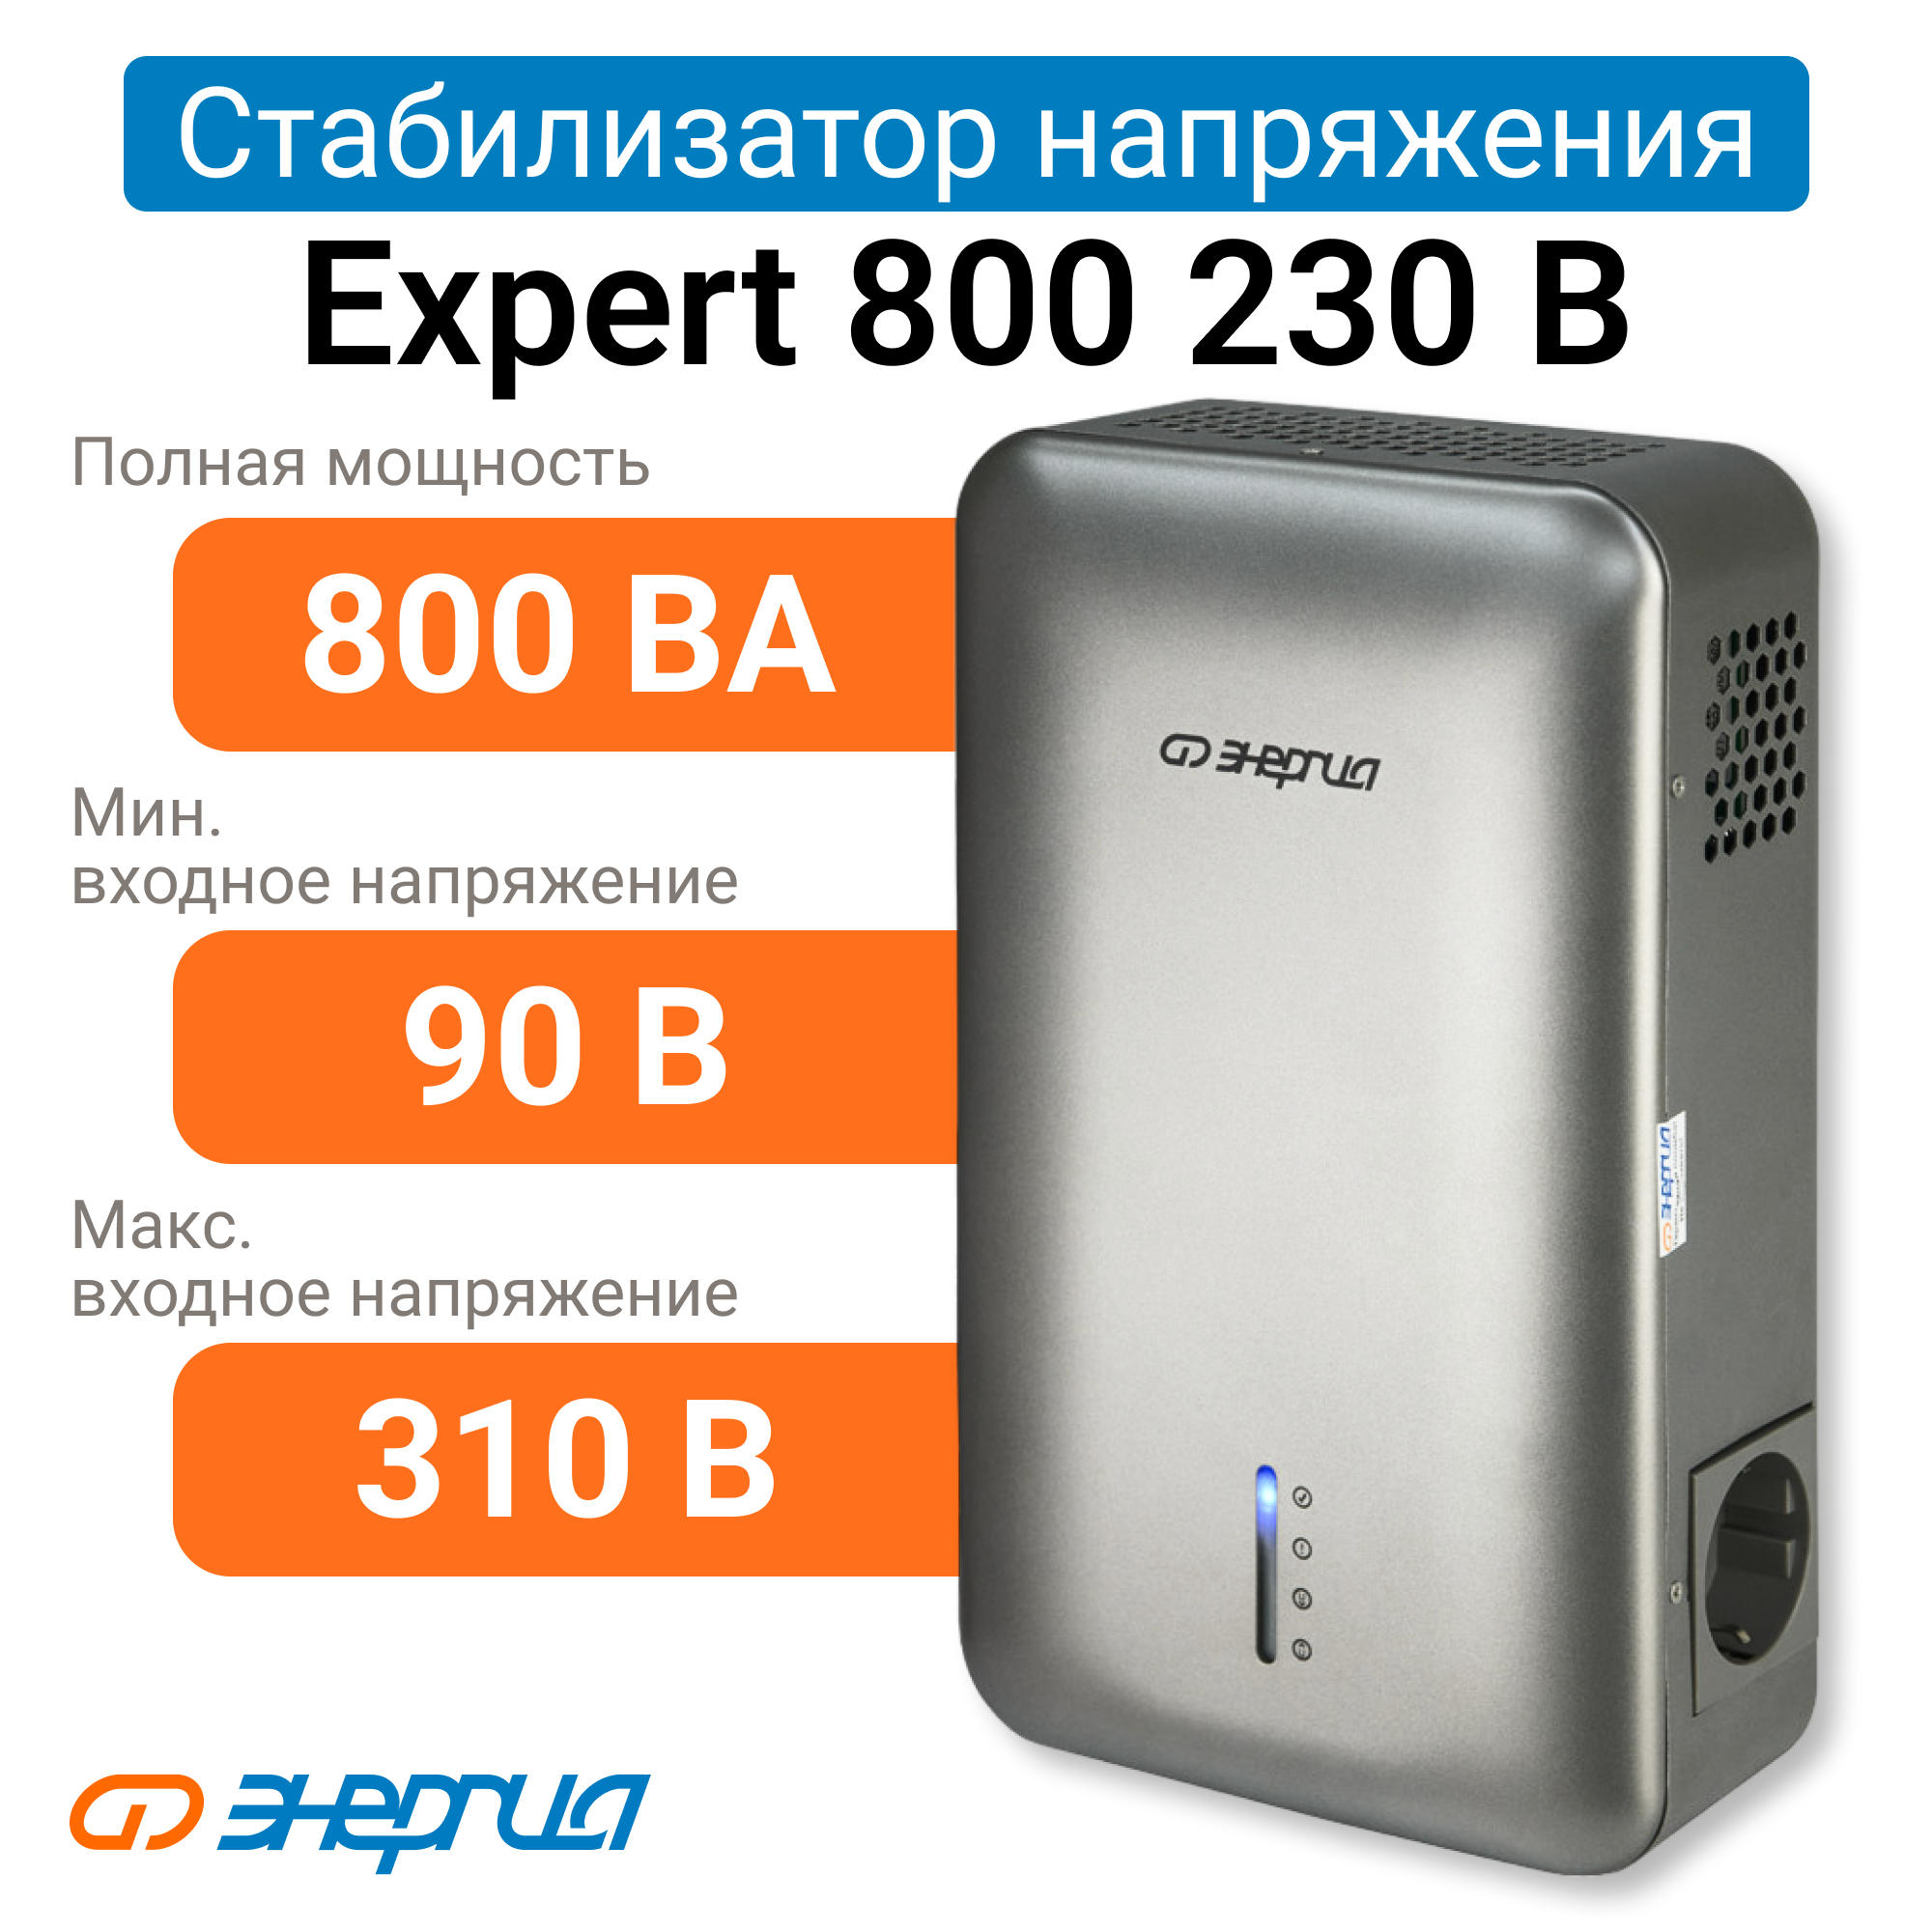 Стабилизатор напряжения Энергия Expert 800 230В (Е0101-0245) стабилизатор напряжения энергия hybrid 1000 е0101 0145